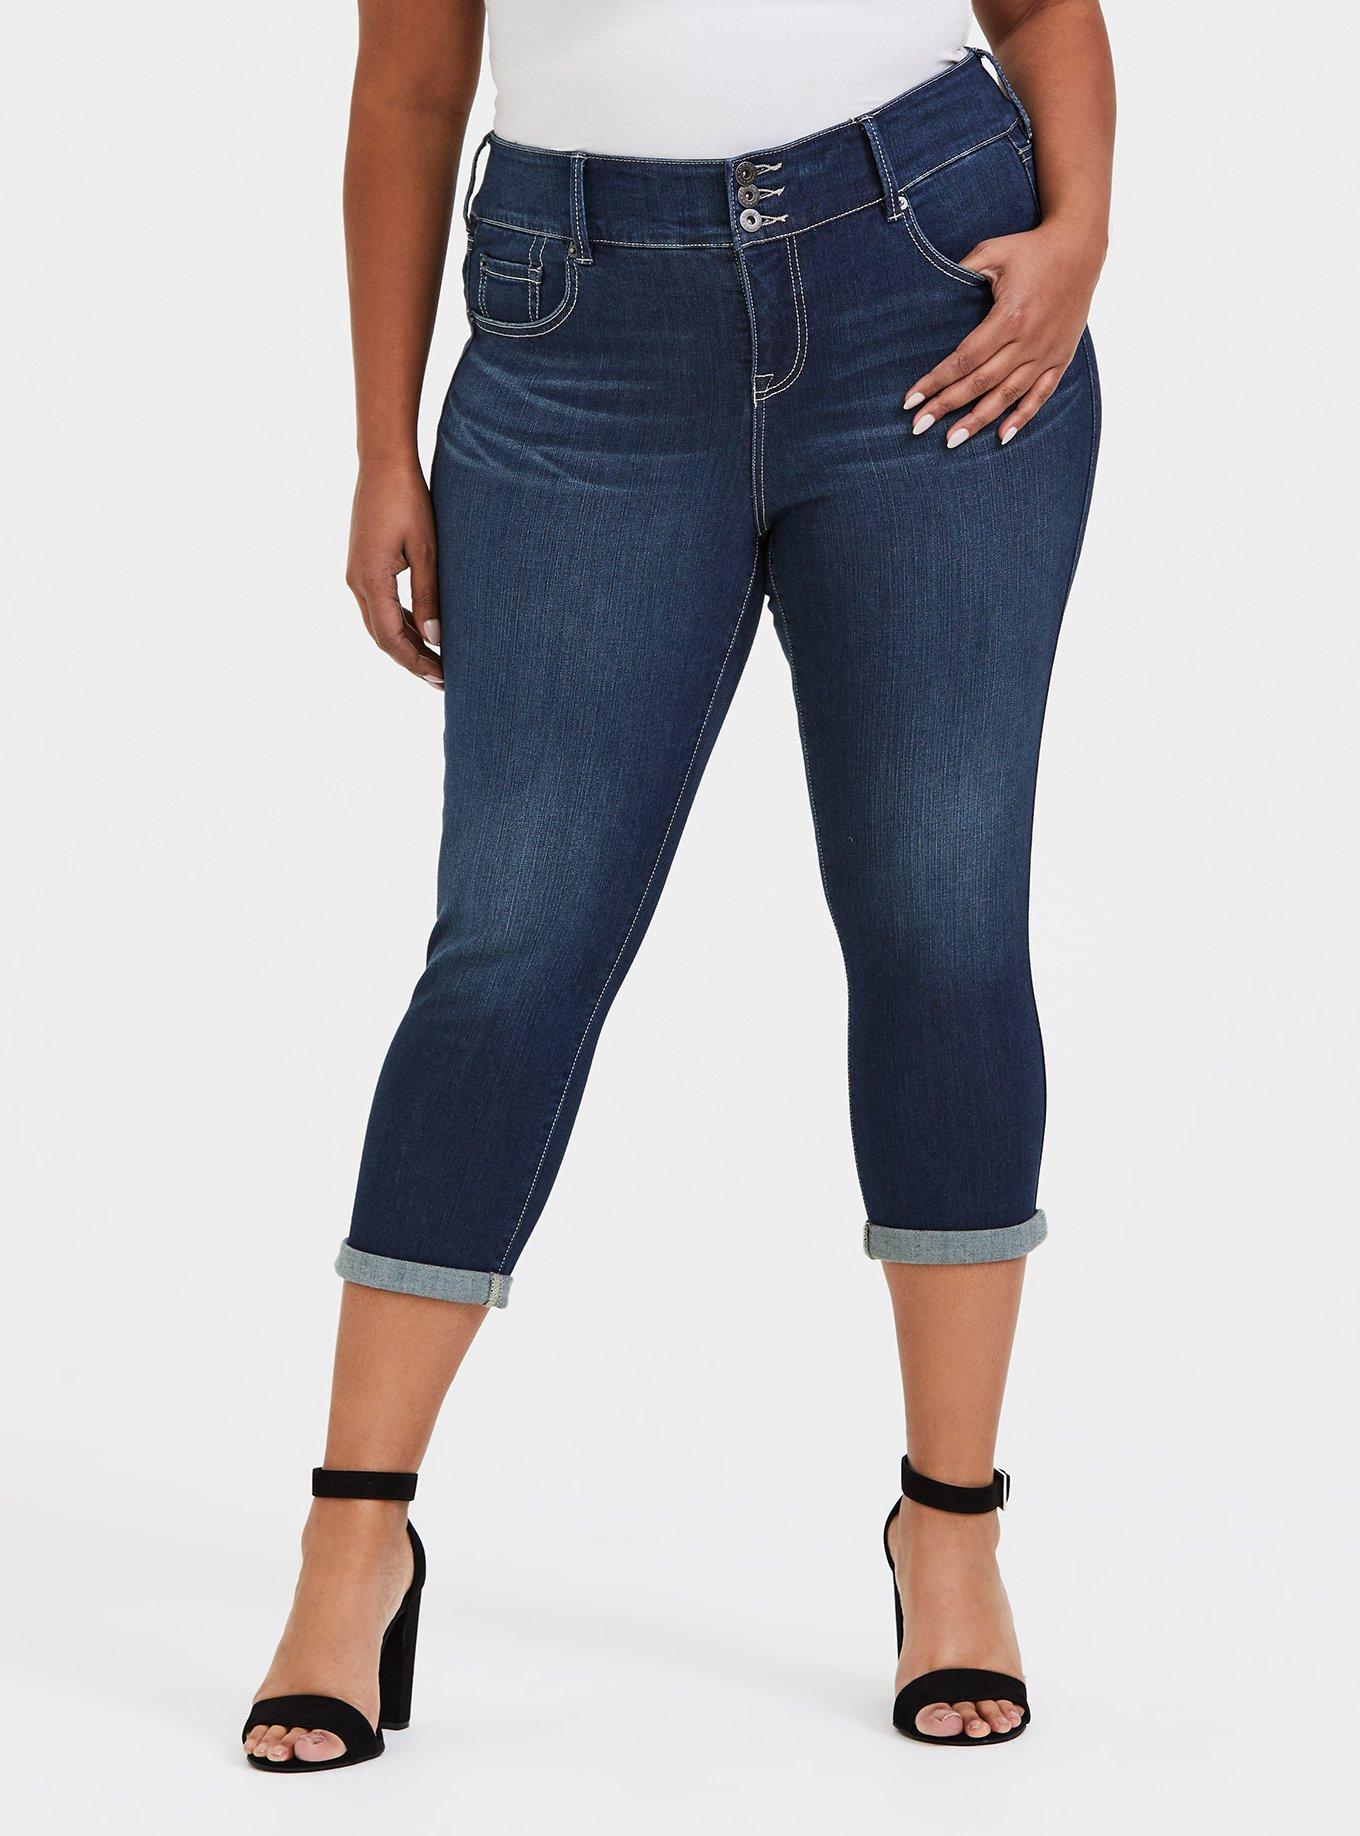 Denim Skinny Jegging*Reg-Plus Size* Super Stretchy Capris Cropped Jeans  Pants